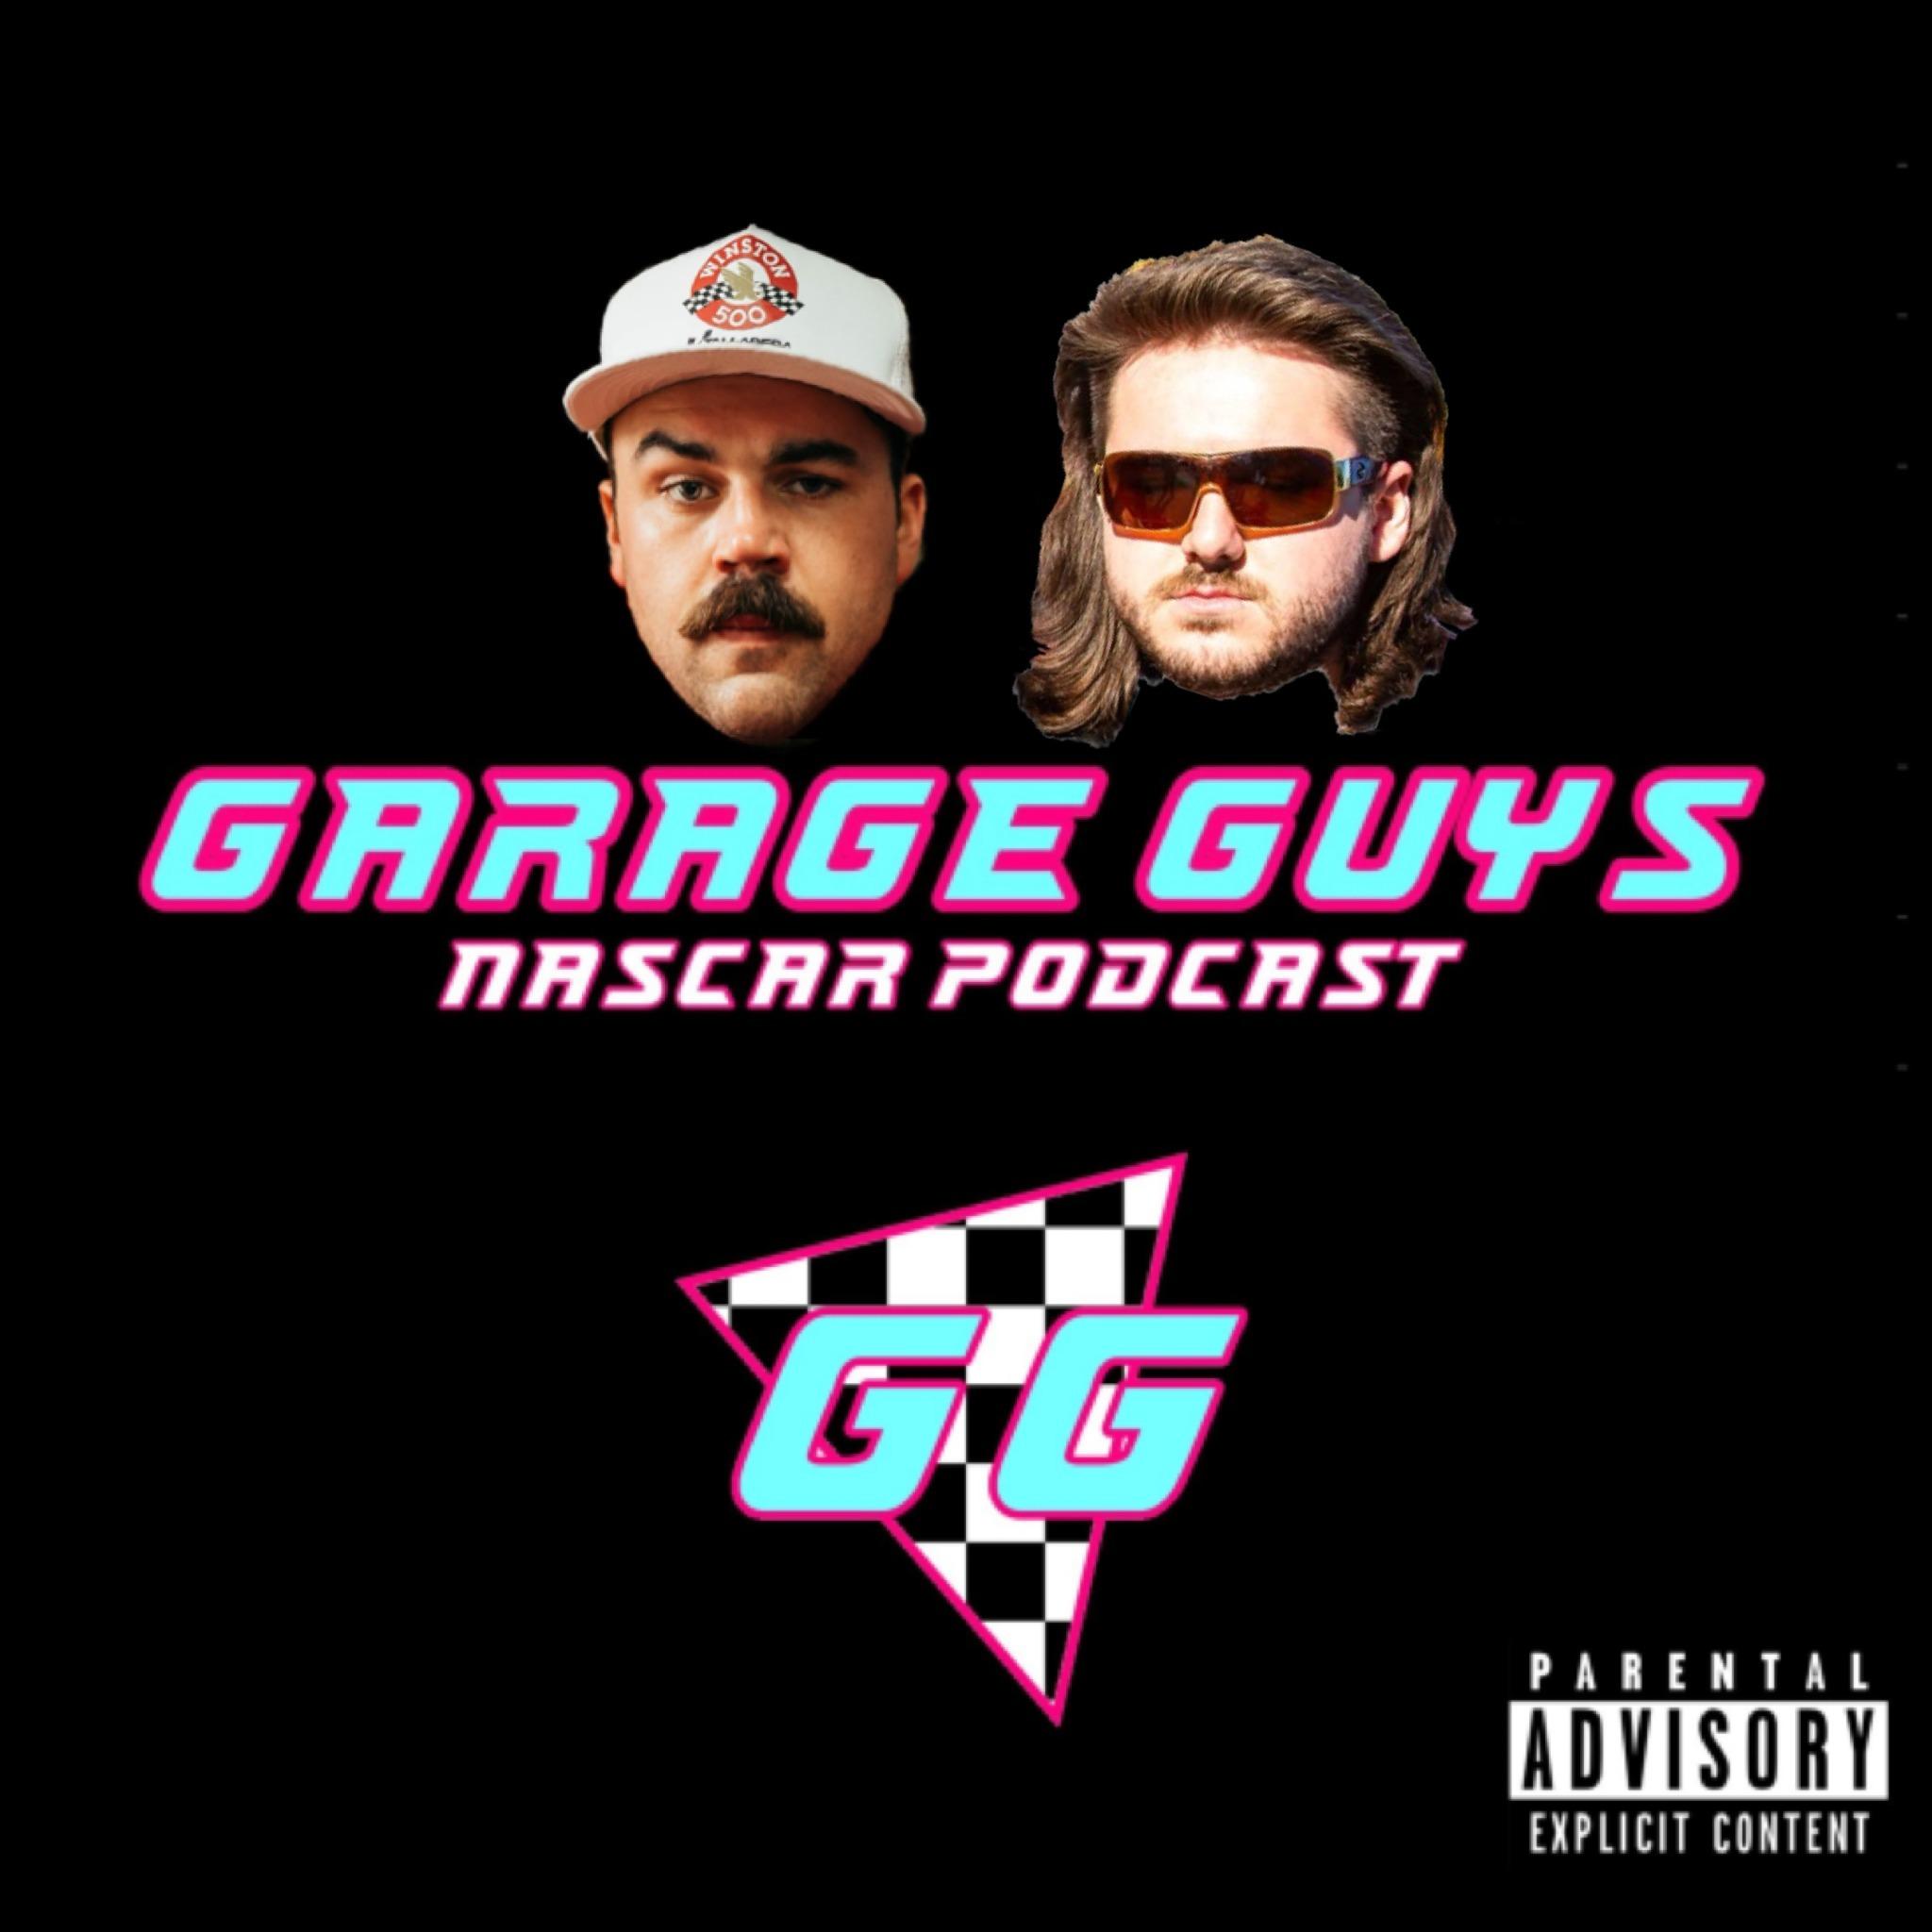 Garage Guys NASCAR Podcast